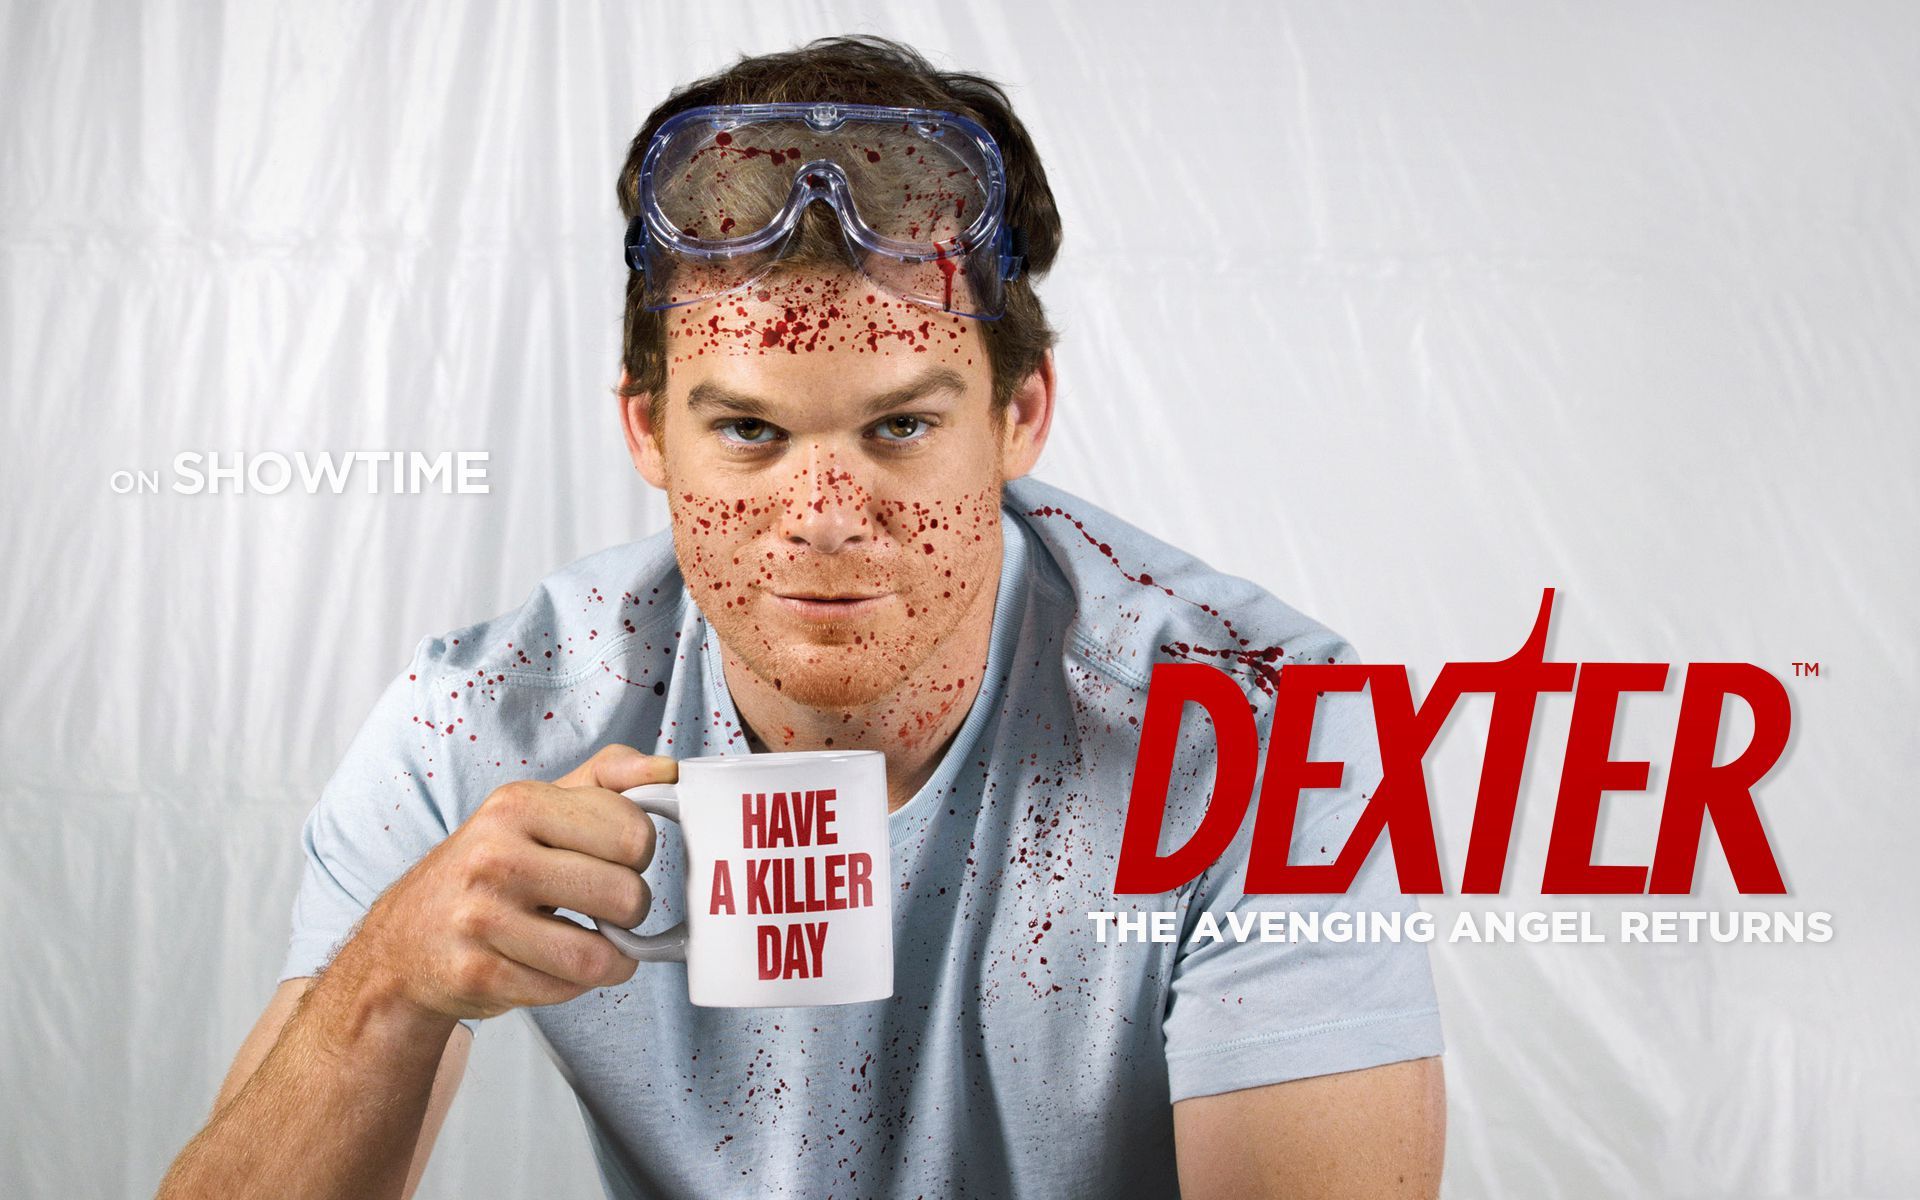 110 Dexter HD Wallpapers Backgrounds - Wallpaper Abyss